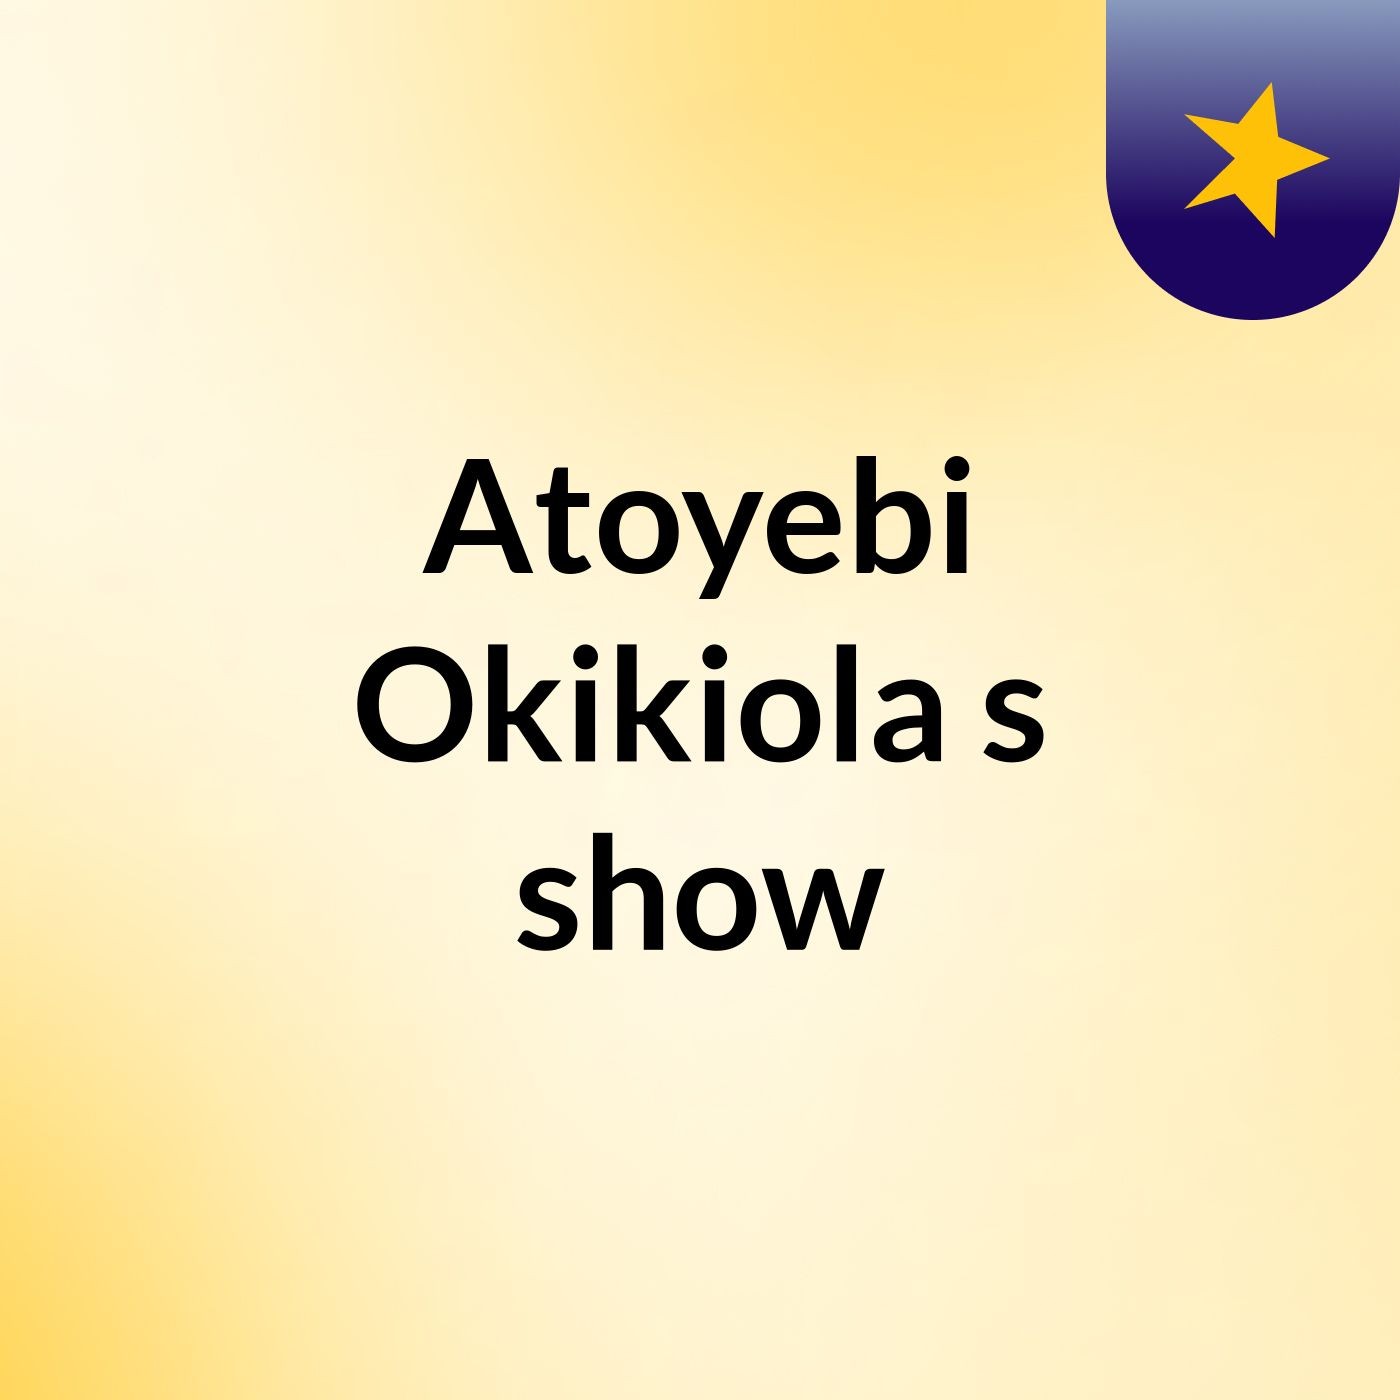 Atoyebi Okikiola's show